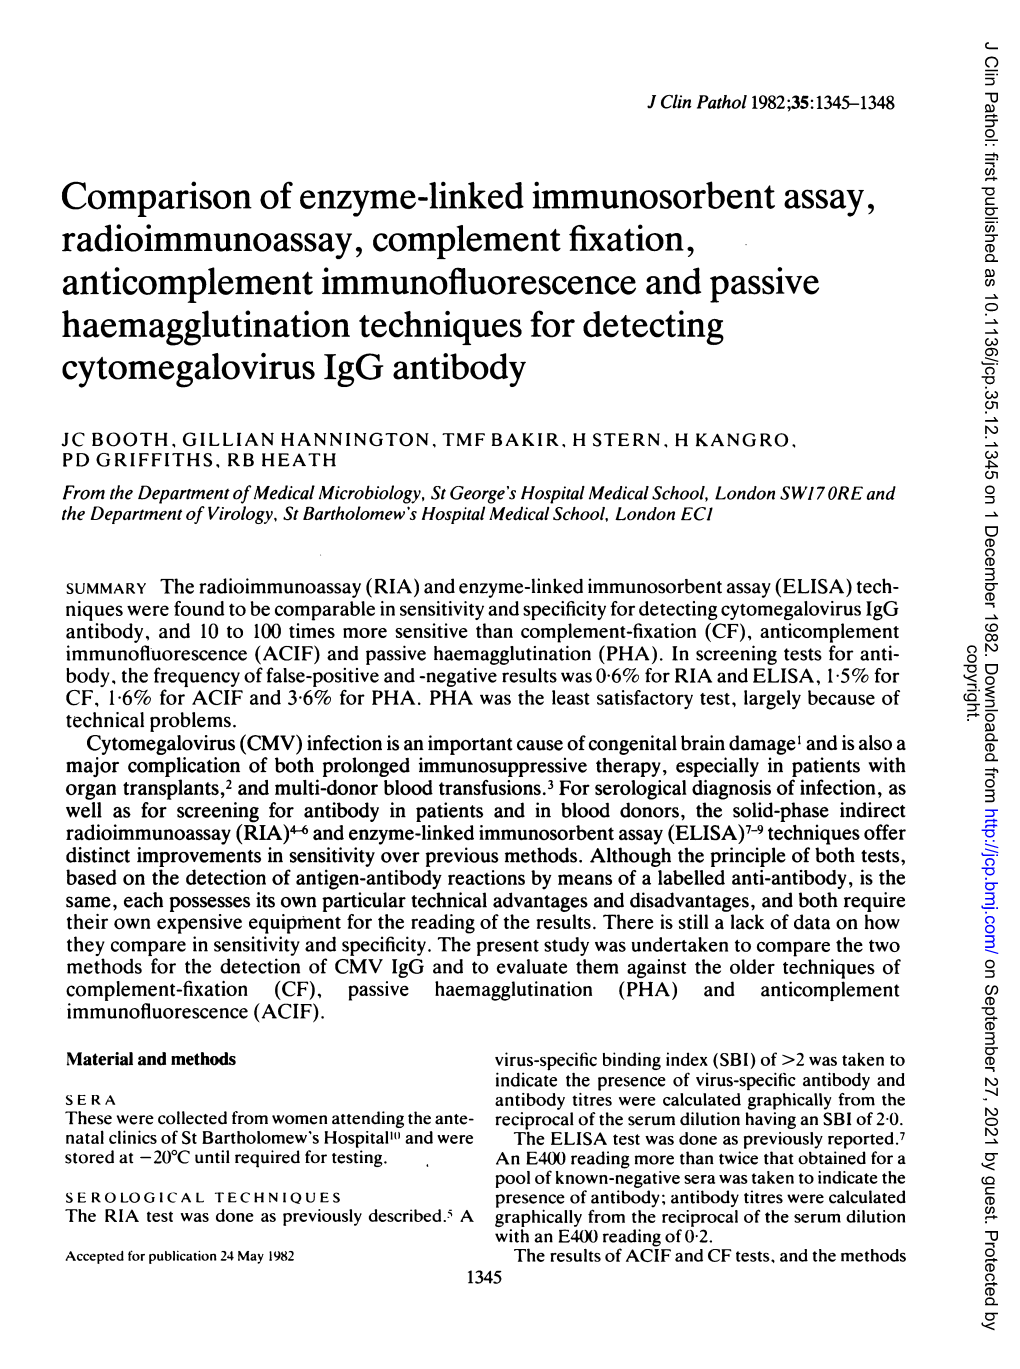 Comparison of Enzyme-Linked Immunosorbentassay